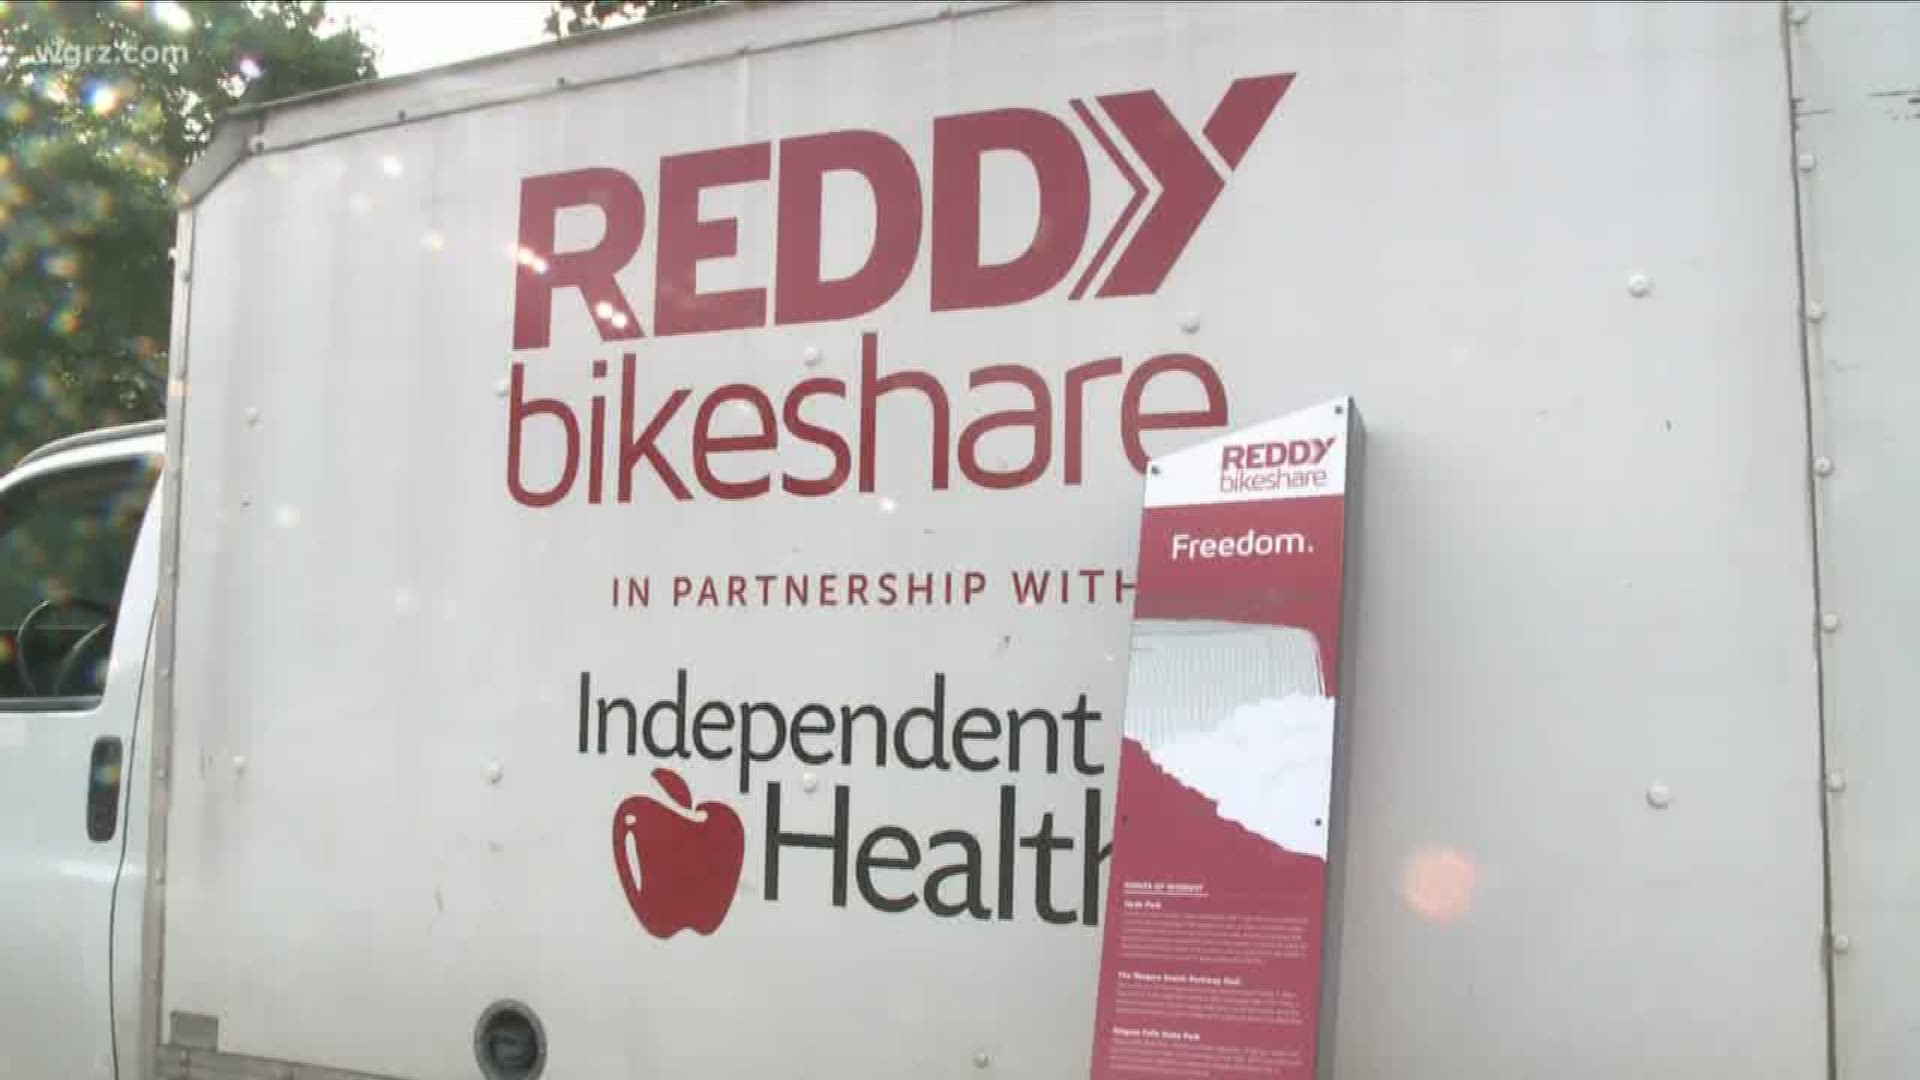 Reddy bikeshare expanding to Niagara Falls